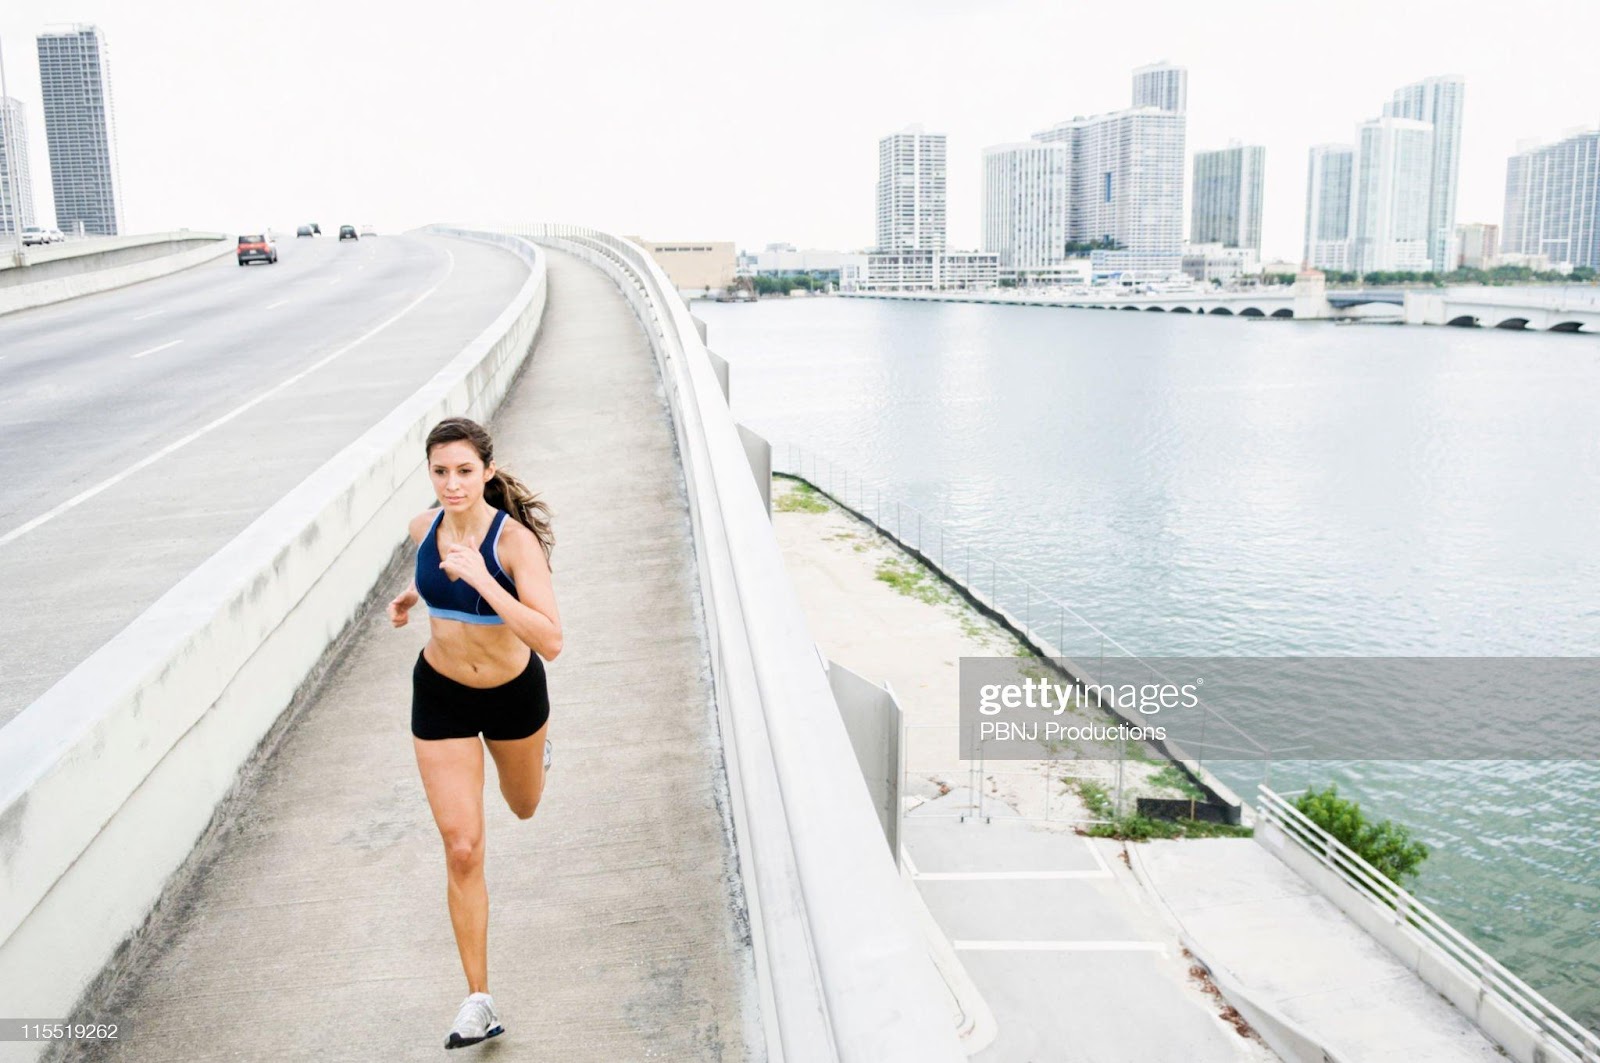 D:\Documenti\posts\posts\Miami\foto\donne normali\hispanic-woman-running-near-urban-waterfront-picture-id115519262.jpg